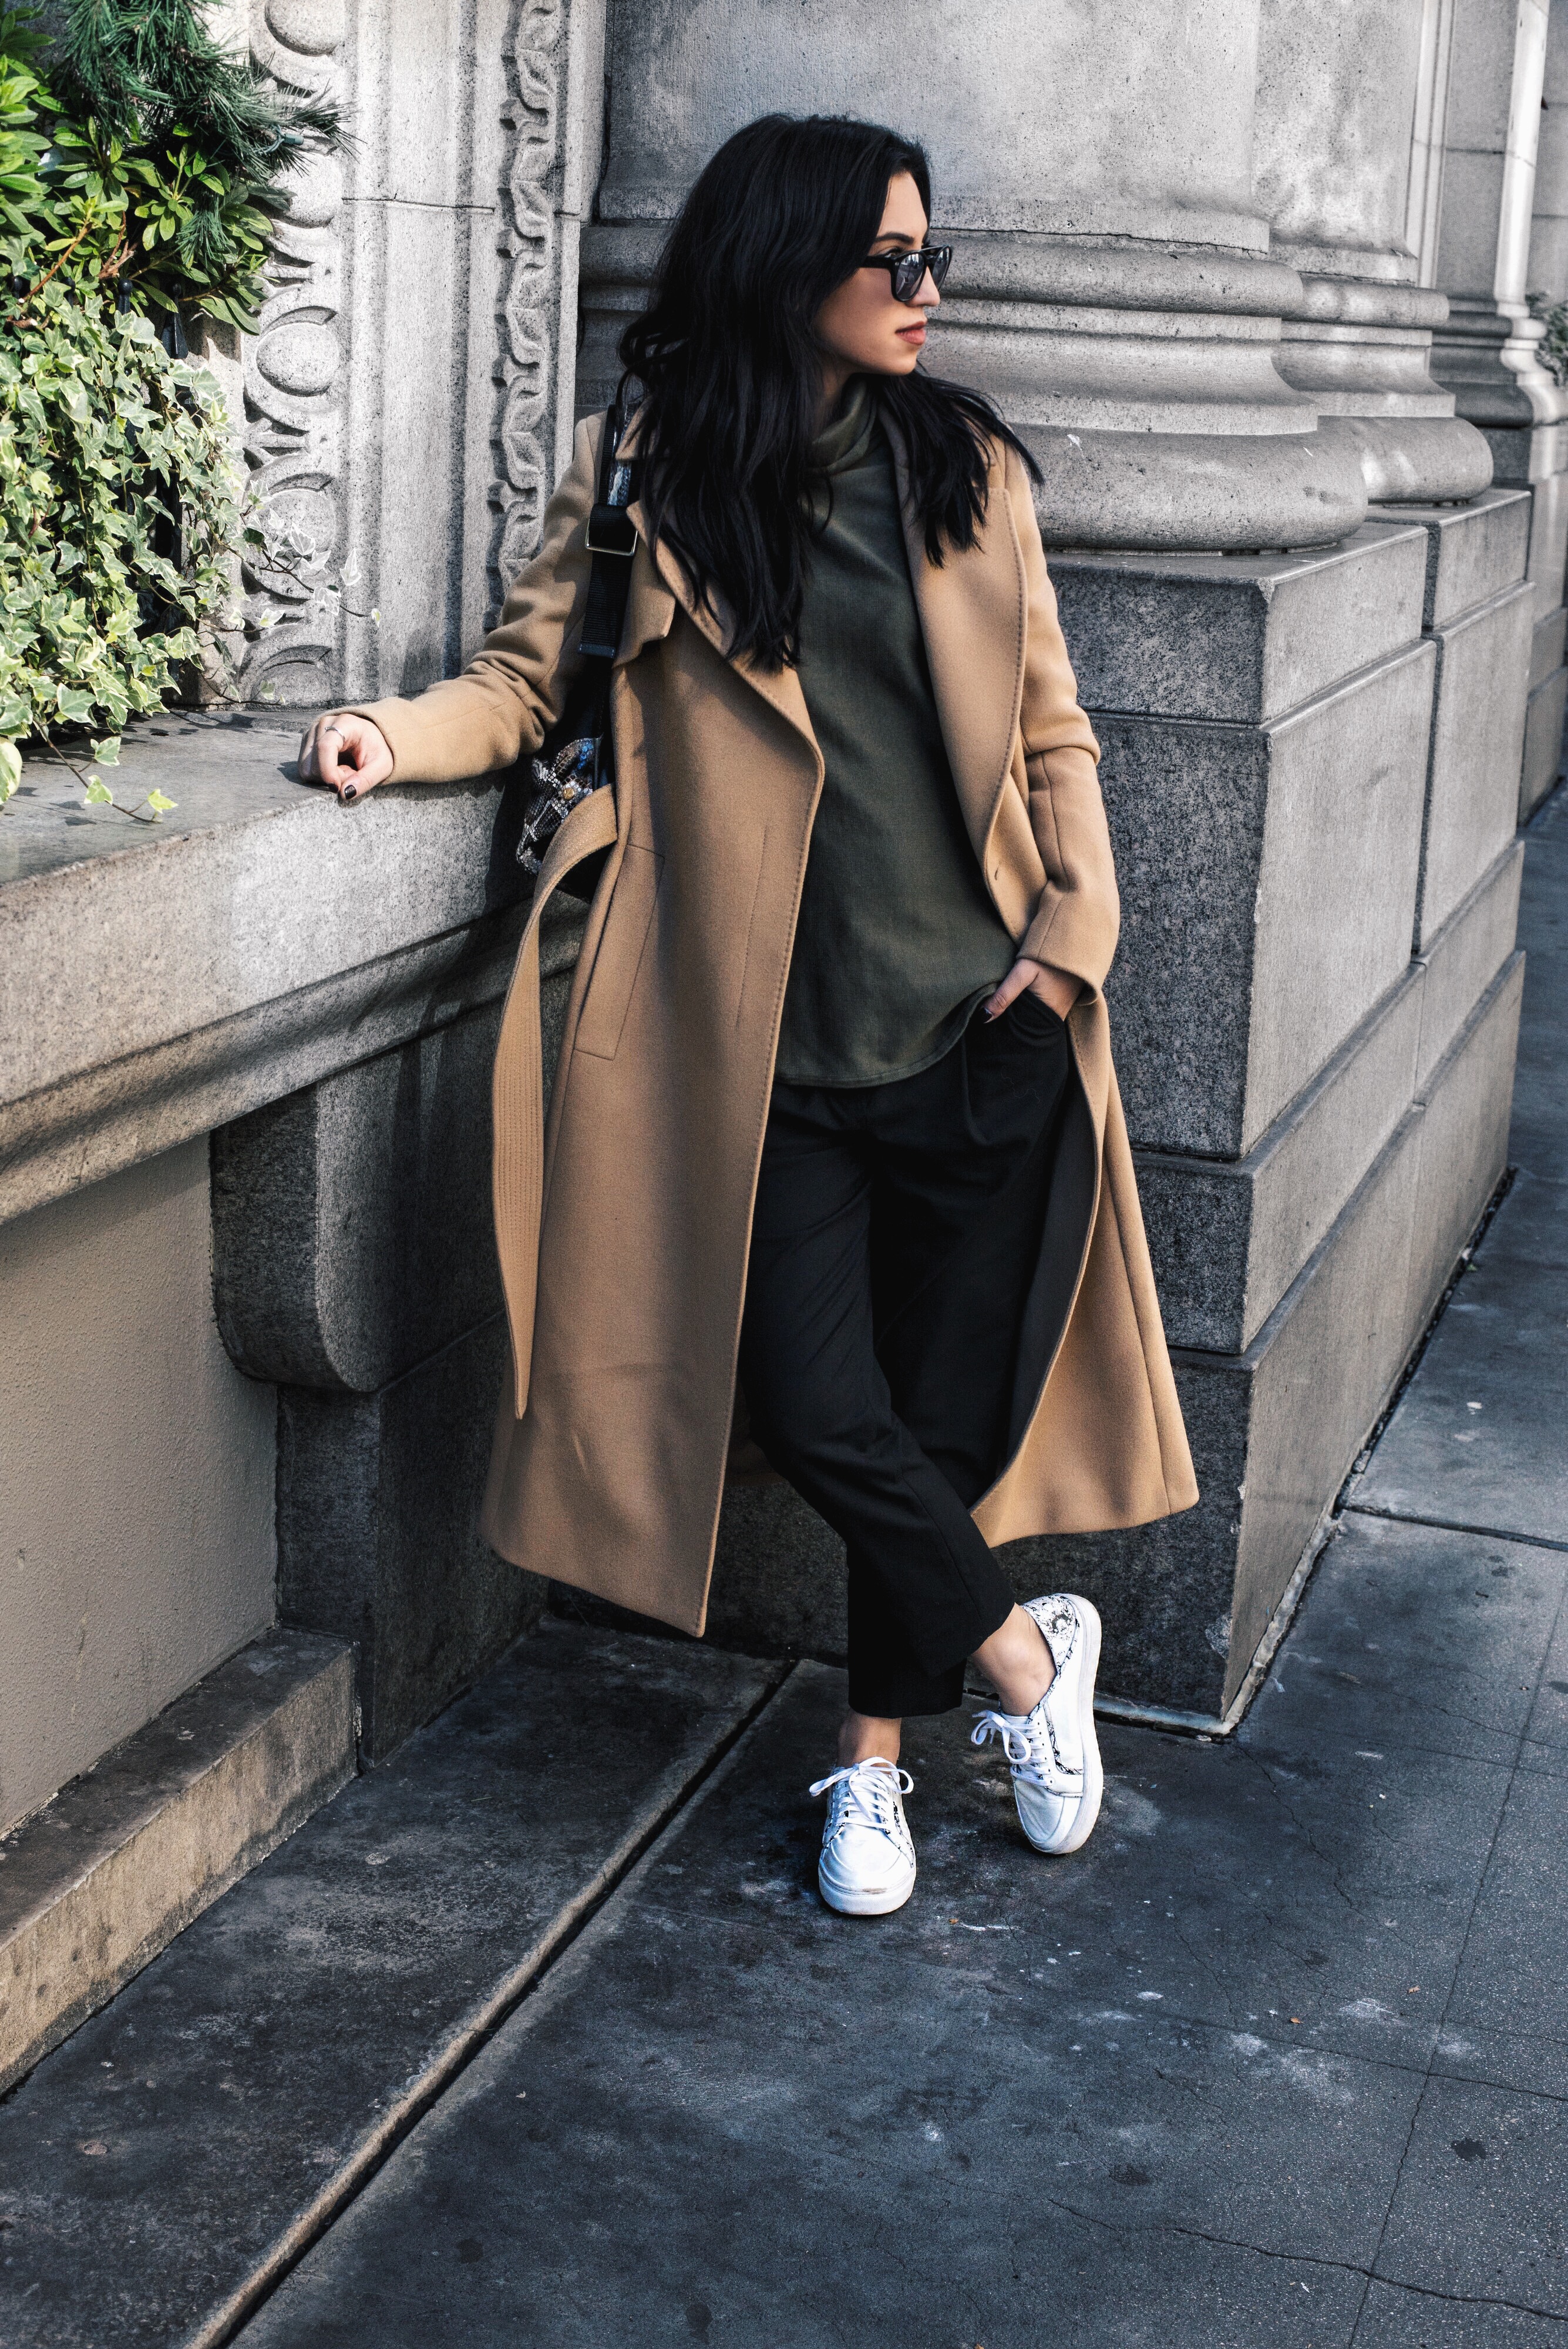 LA blogger Tania Sarin wearing long camel coat and sneakers